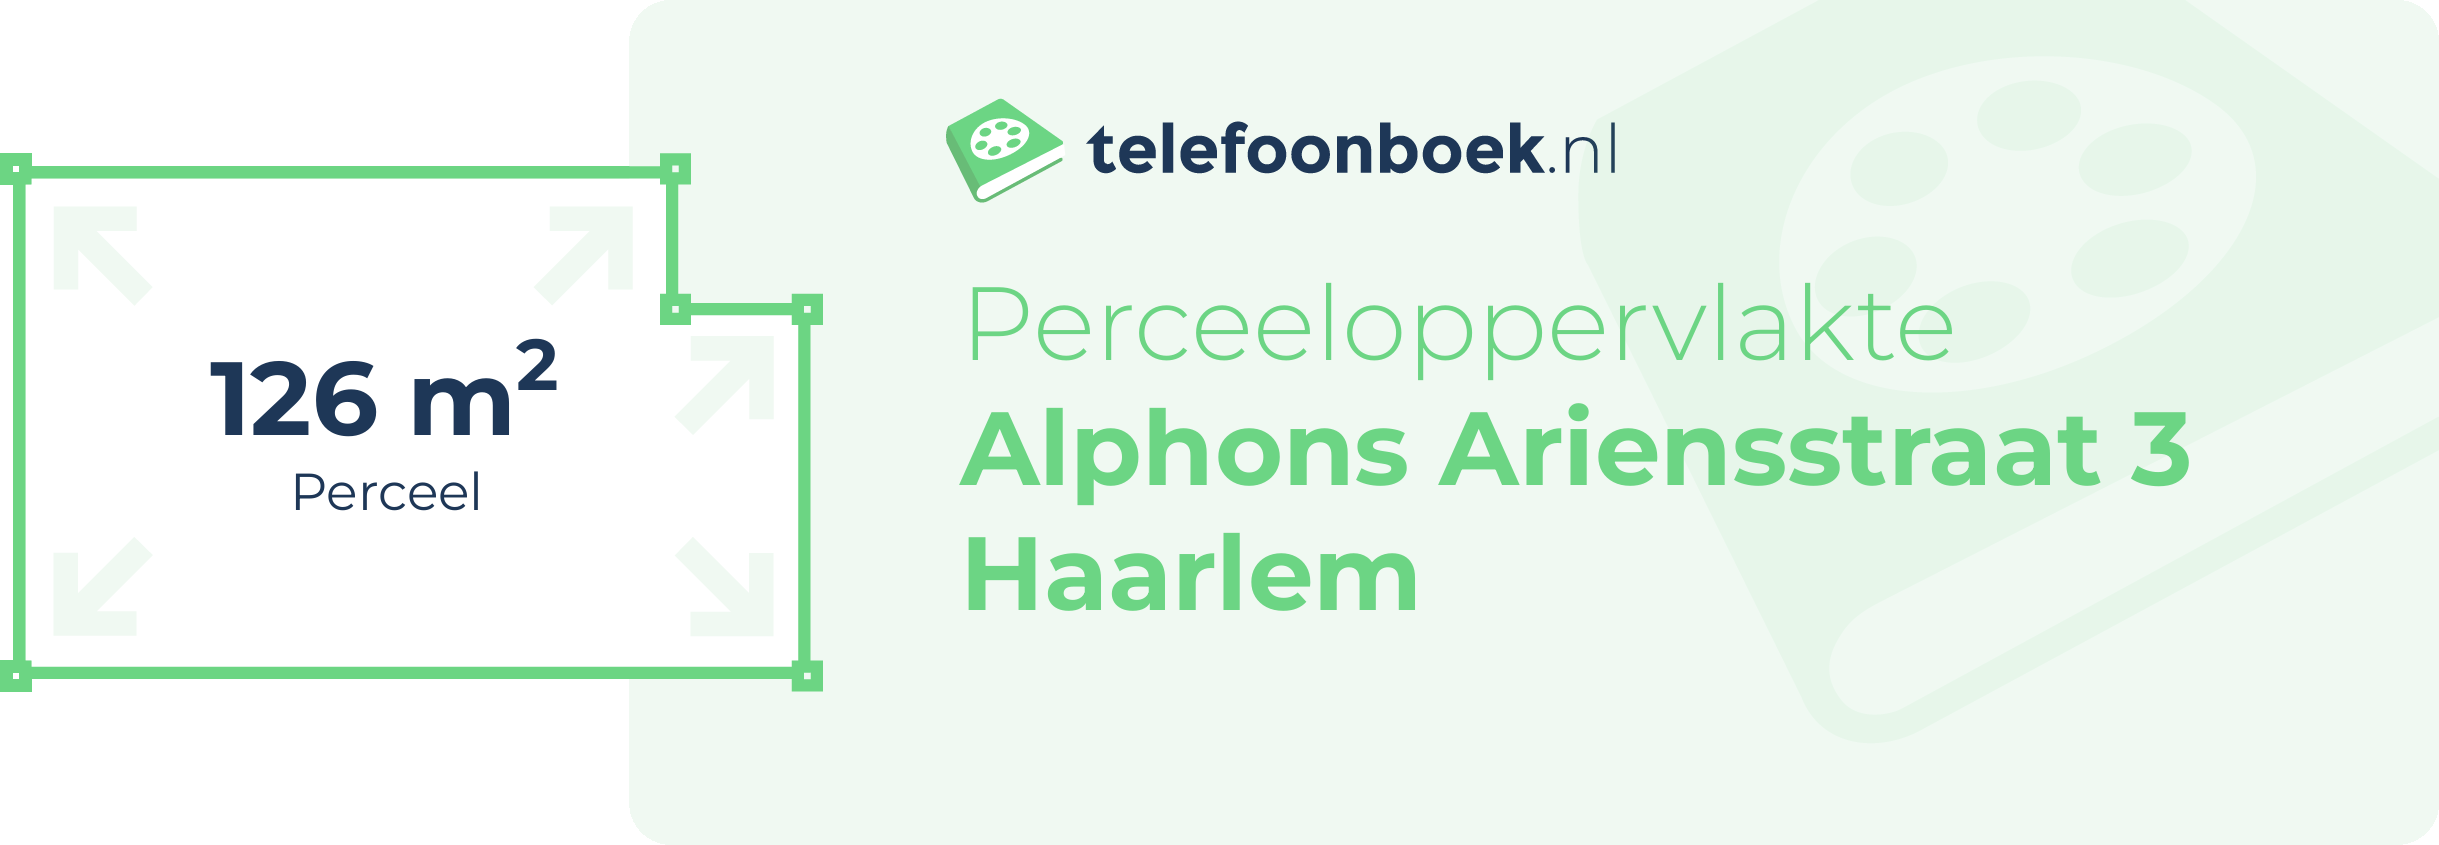 Perceeloppervlakte Alphons Ariensstraat 3 Haarlem